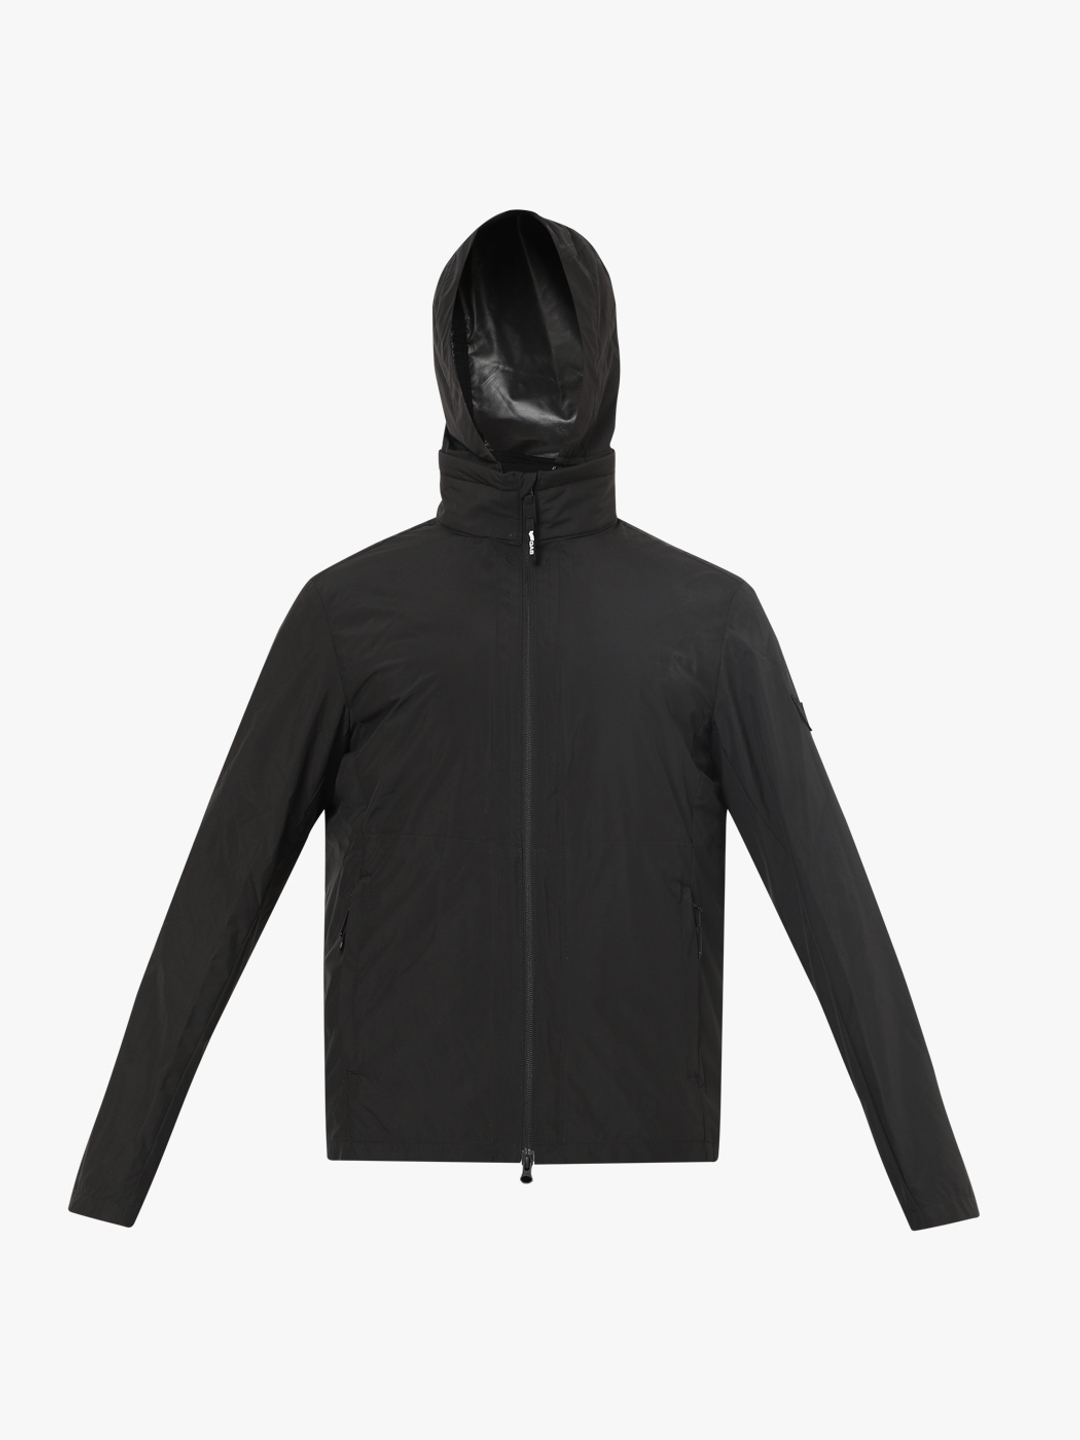 Modesto Zip-Front Hooded Jacket with Zip Pockets